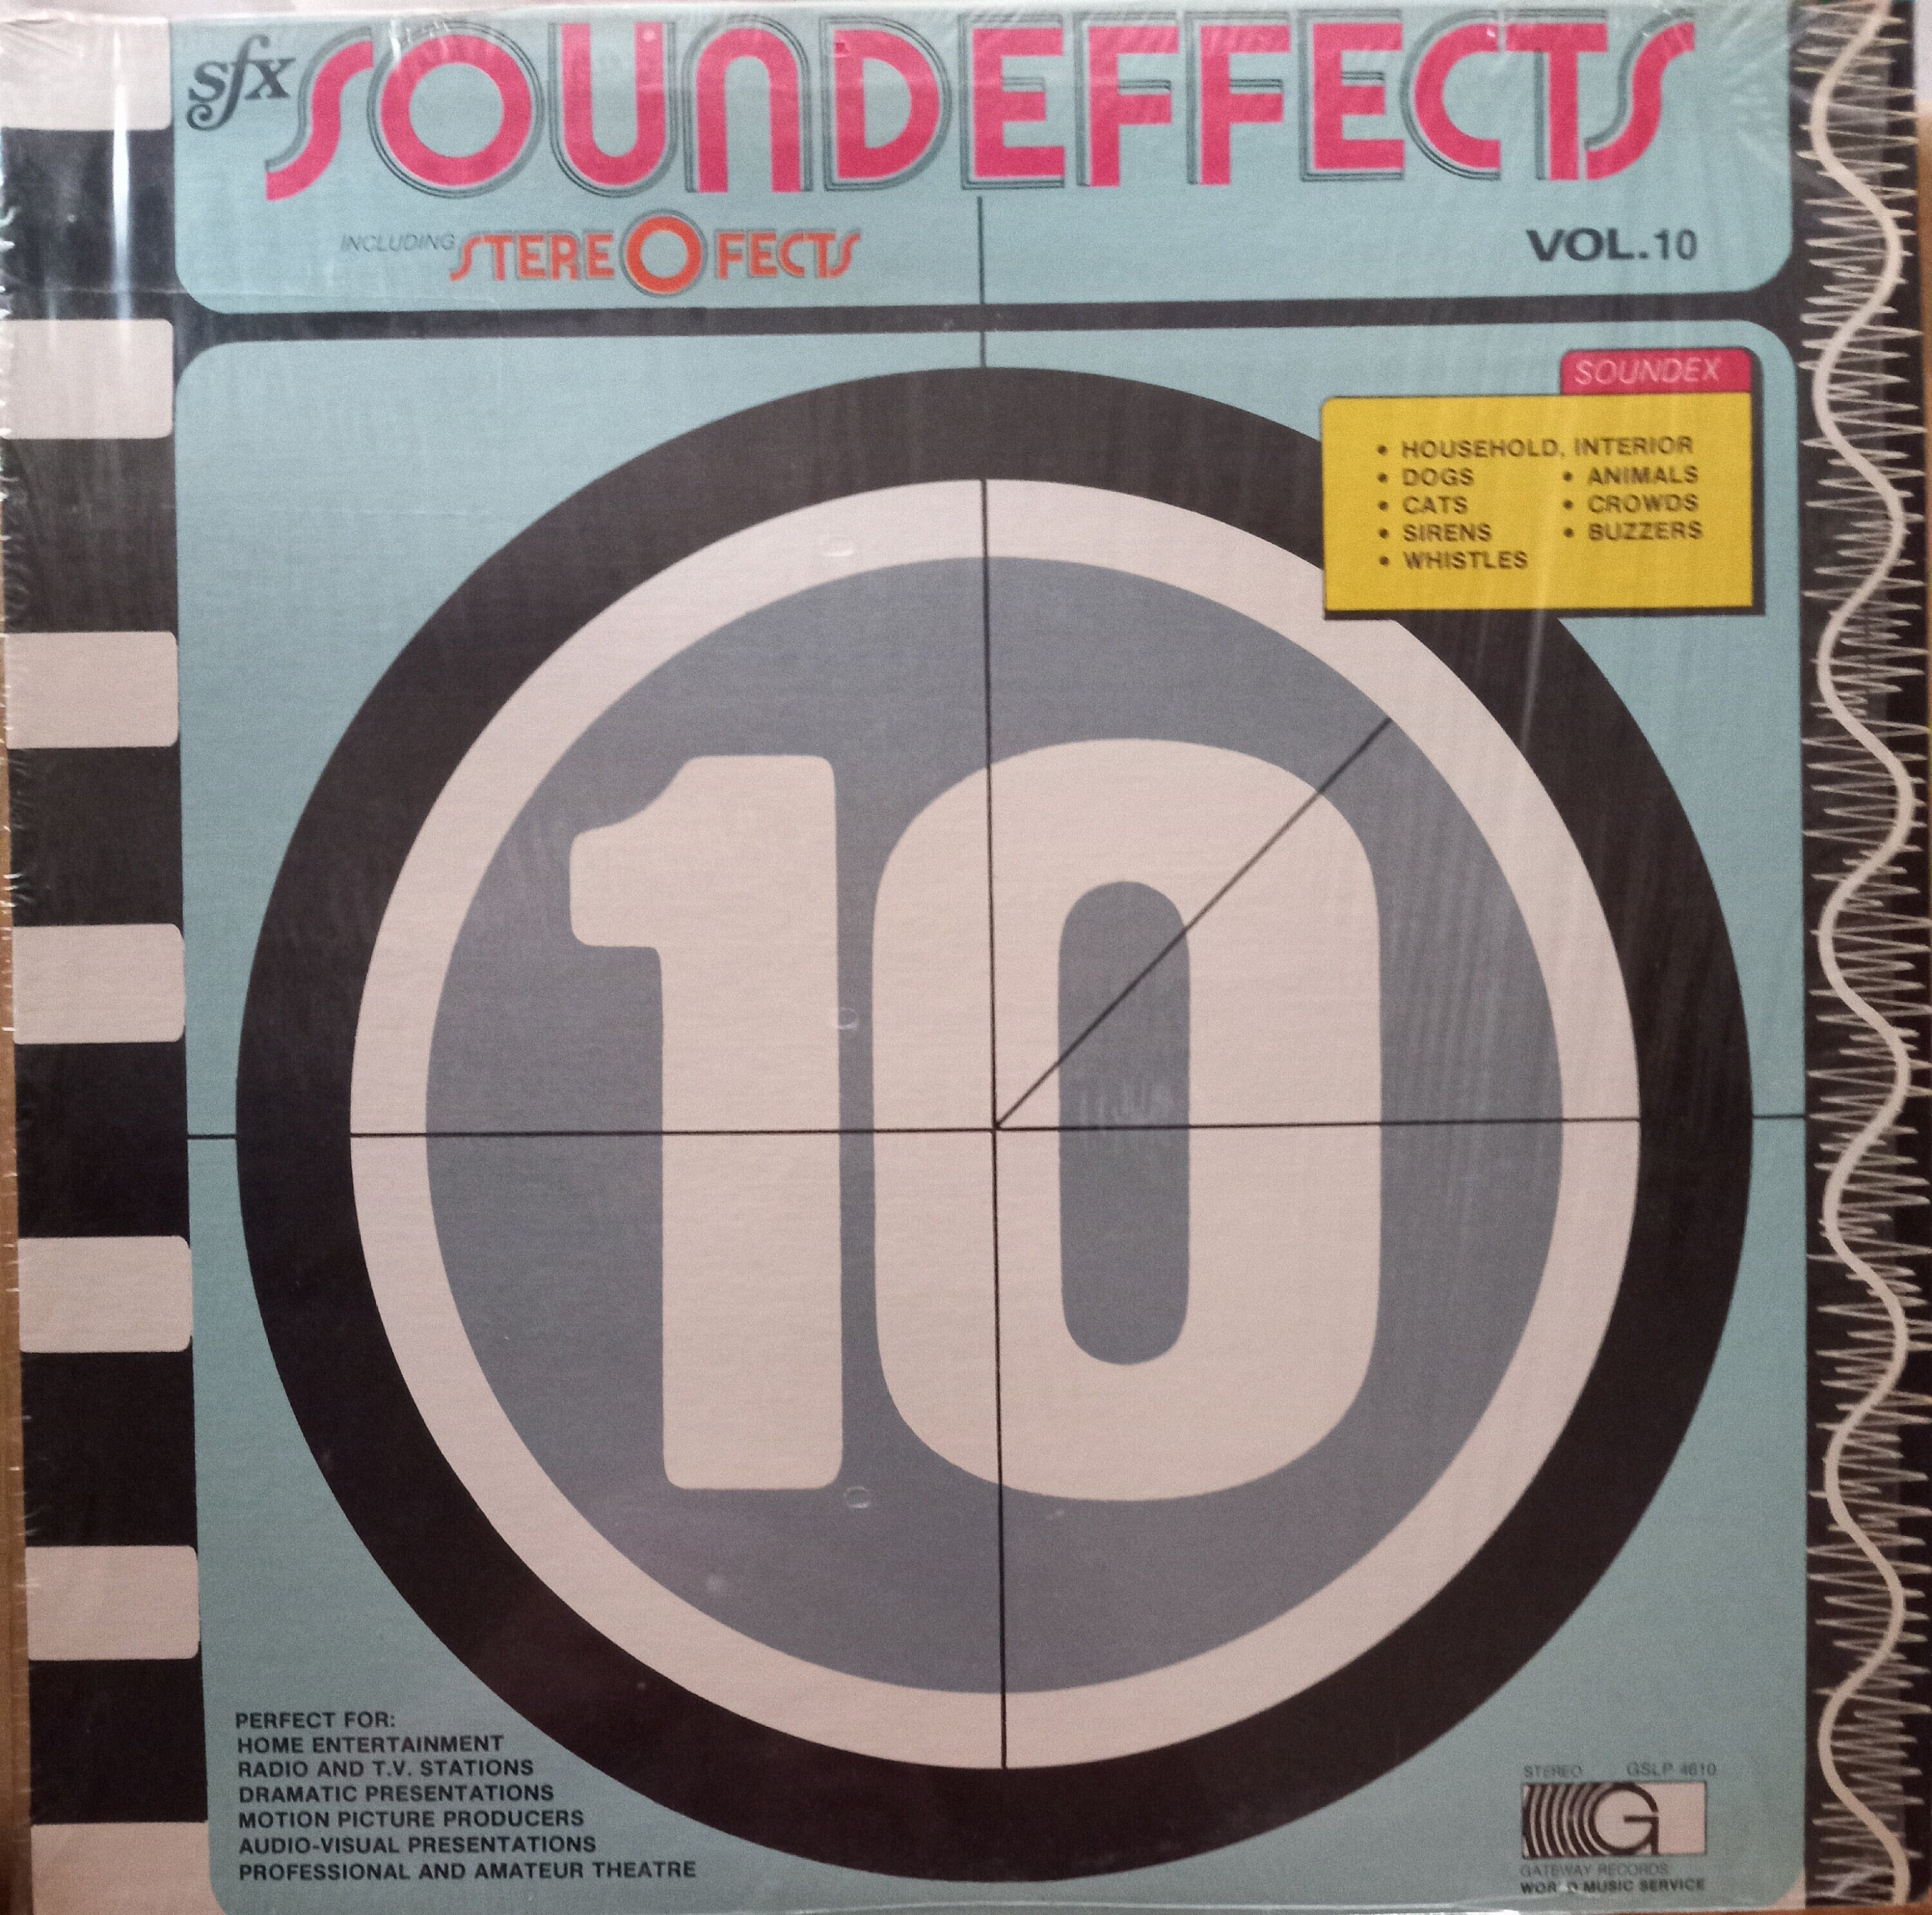 SFX Sound Effects Volume 10 Vintage Record Album Vinyl LP